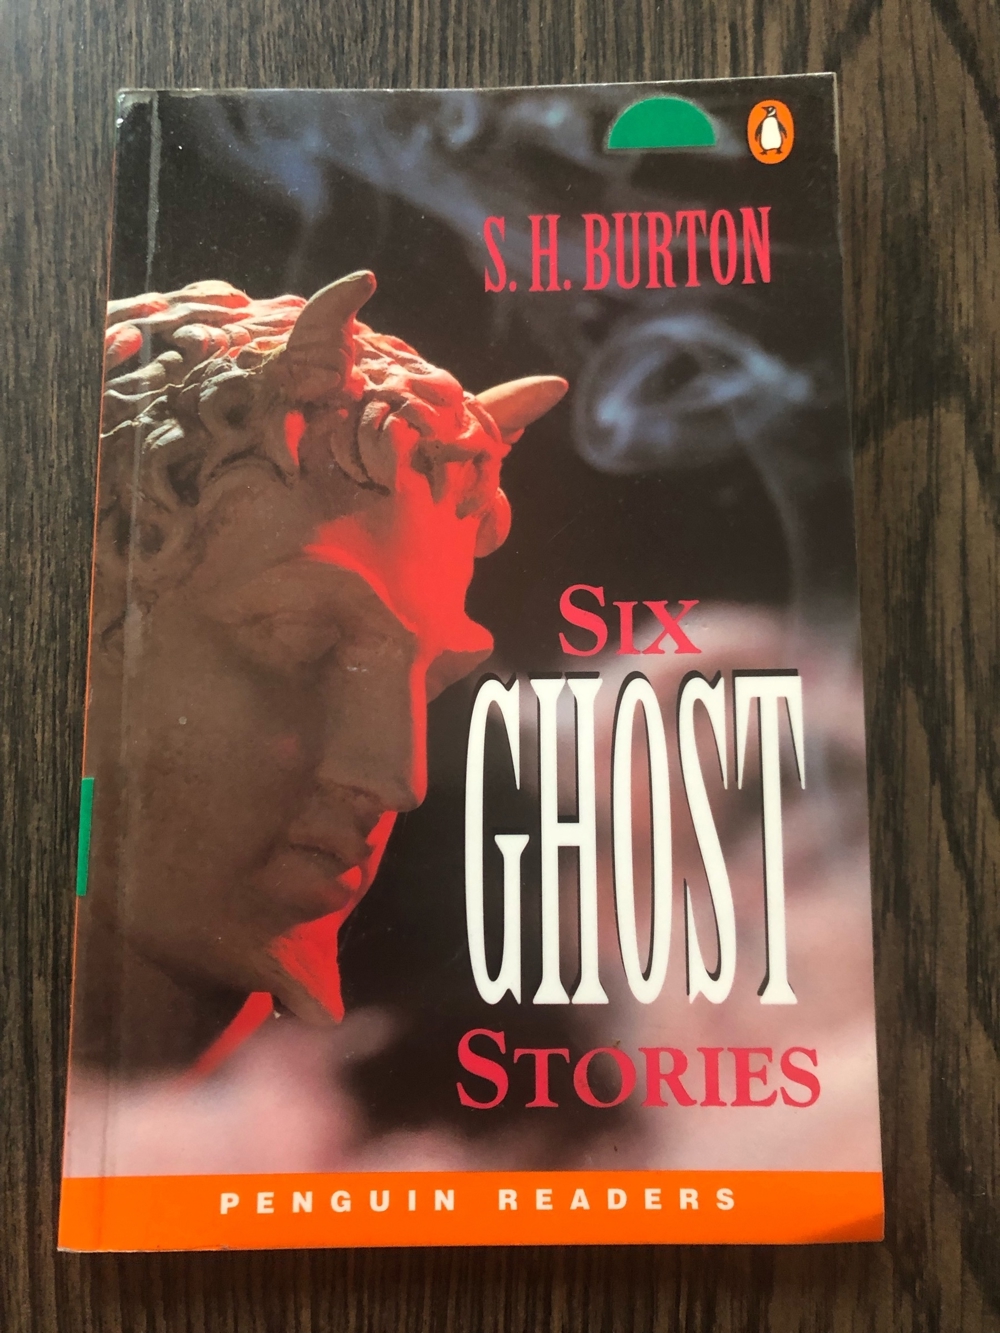 Six Ghost Stories, S. H. Burton